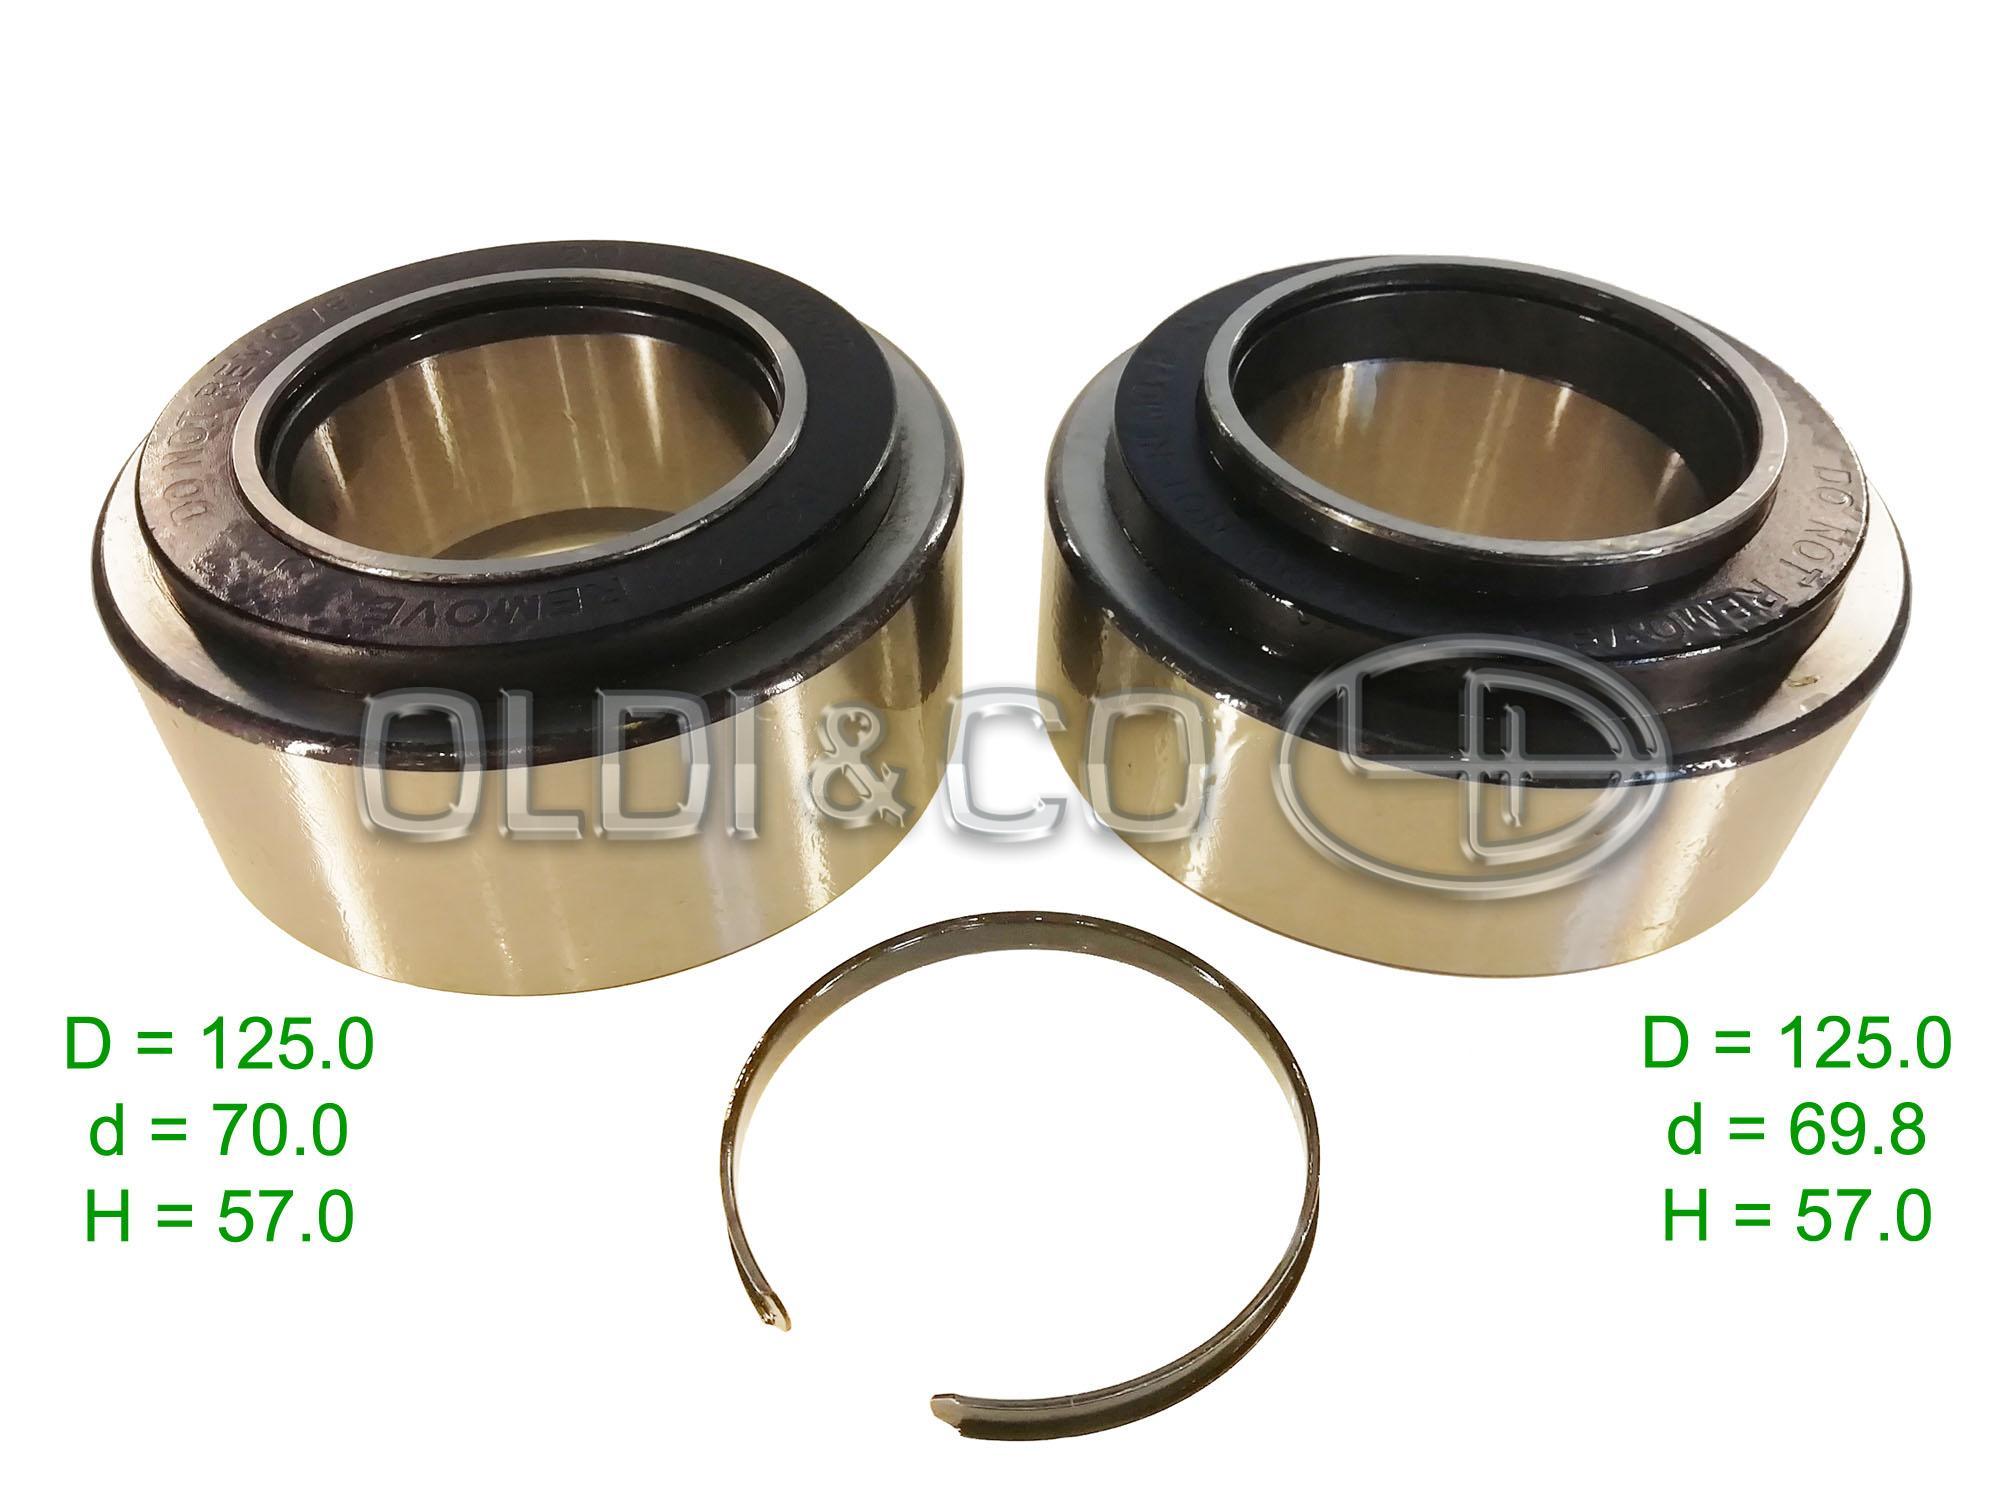 34.110.16920 Suspension parts → Hub rep. kit - bearings/seals